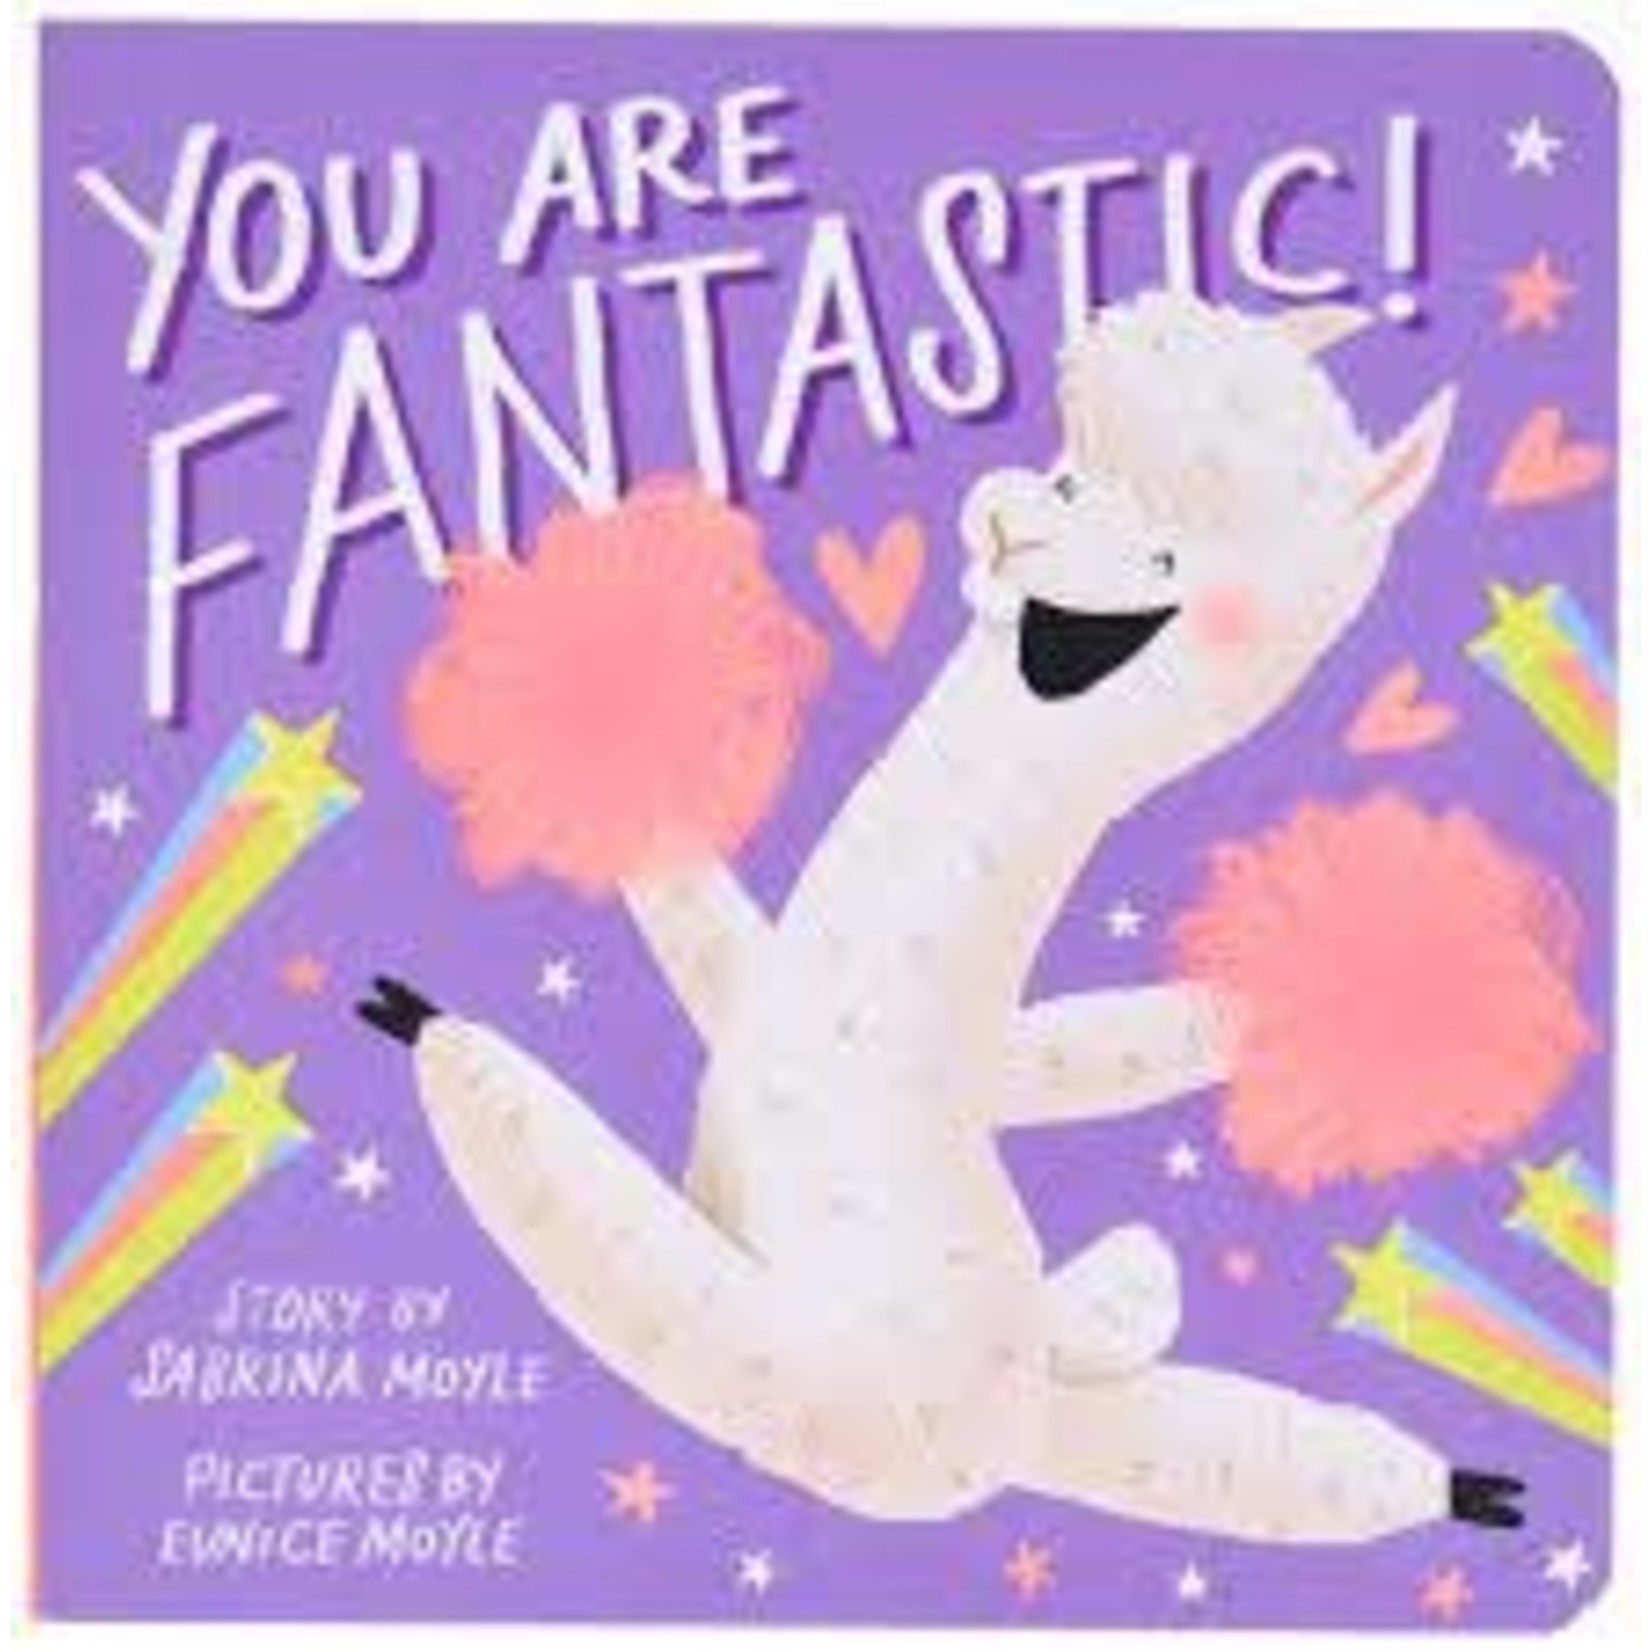 You Are Fantastic!